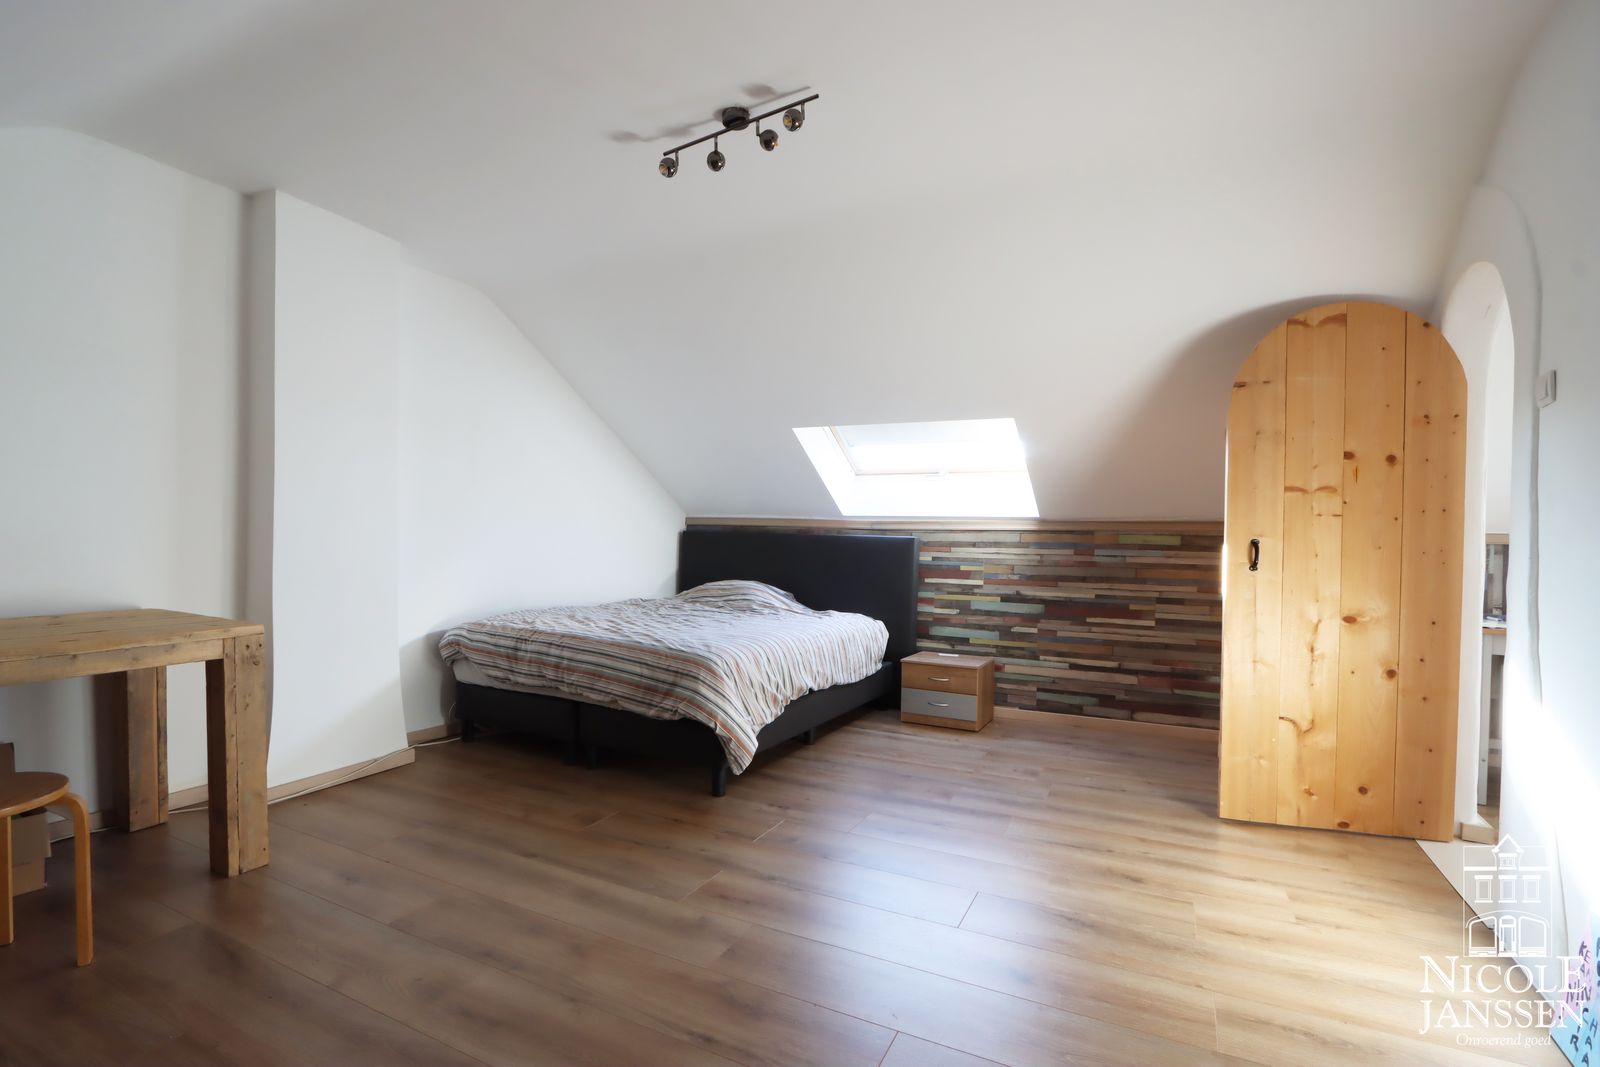 25 Nicole Janssen - huis te koop - Kantonsweg 66 te Rotem - slaapkamer3.jpg